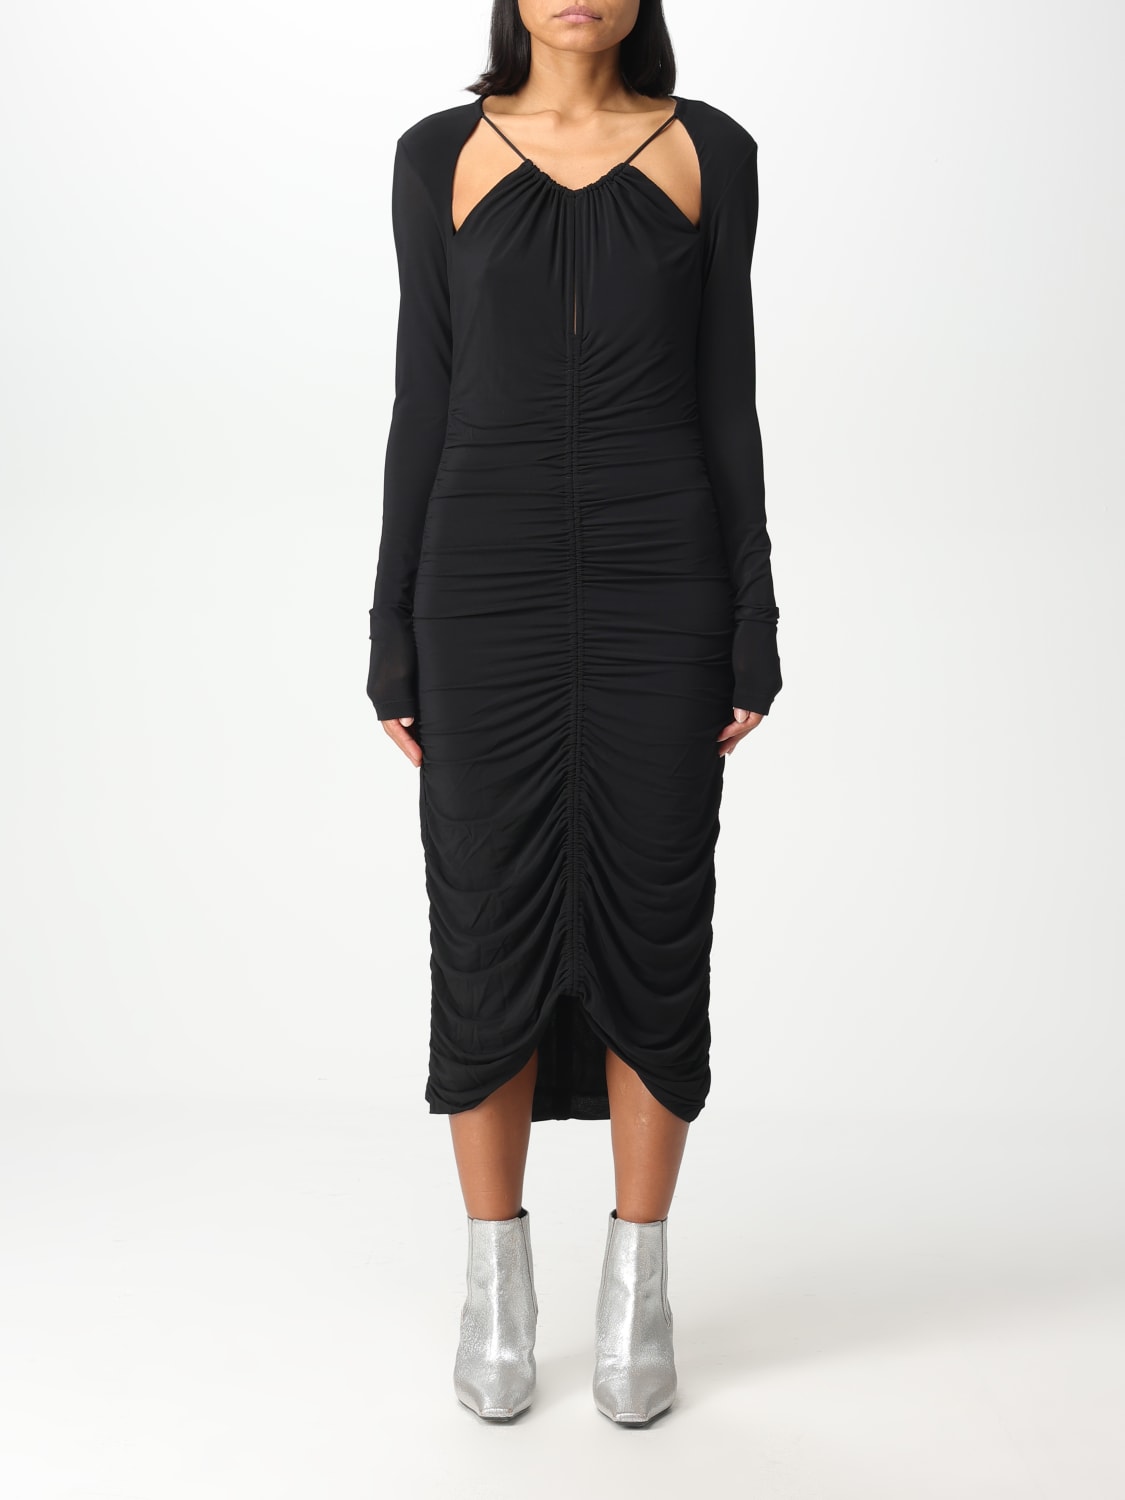 MARANT: dress woman - Black | Isabel Marant dress RO0180FAA3K14I at GIGLIO.COM